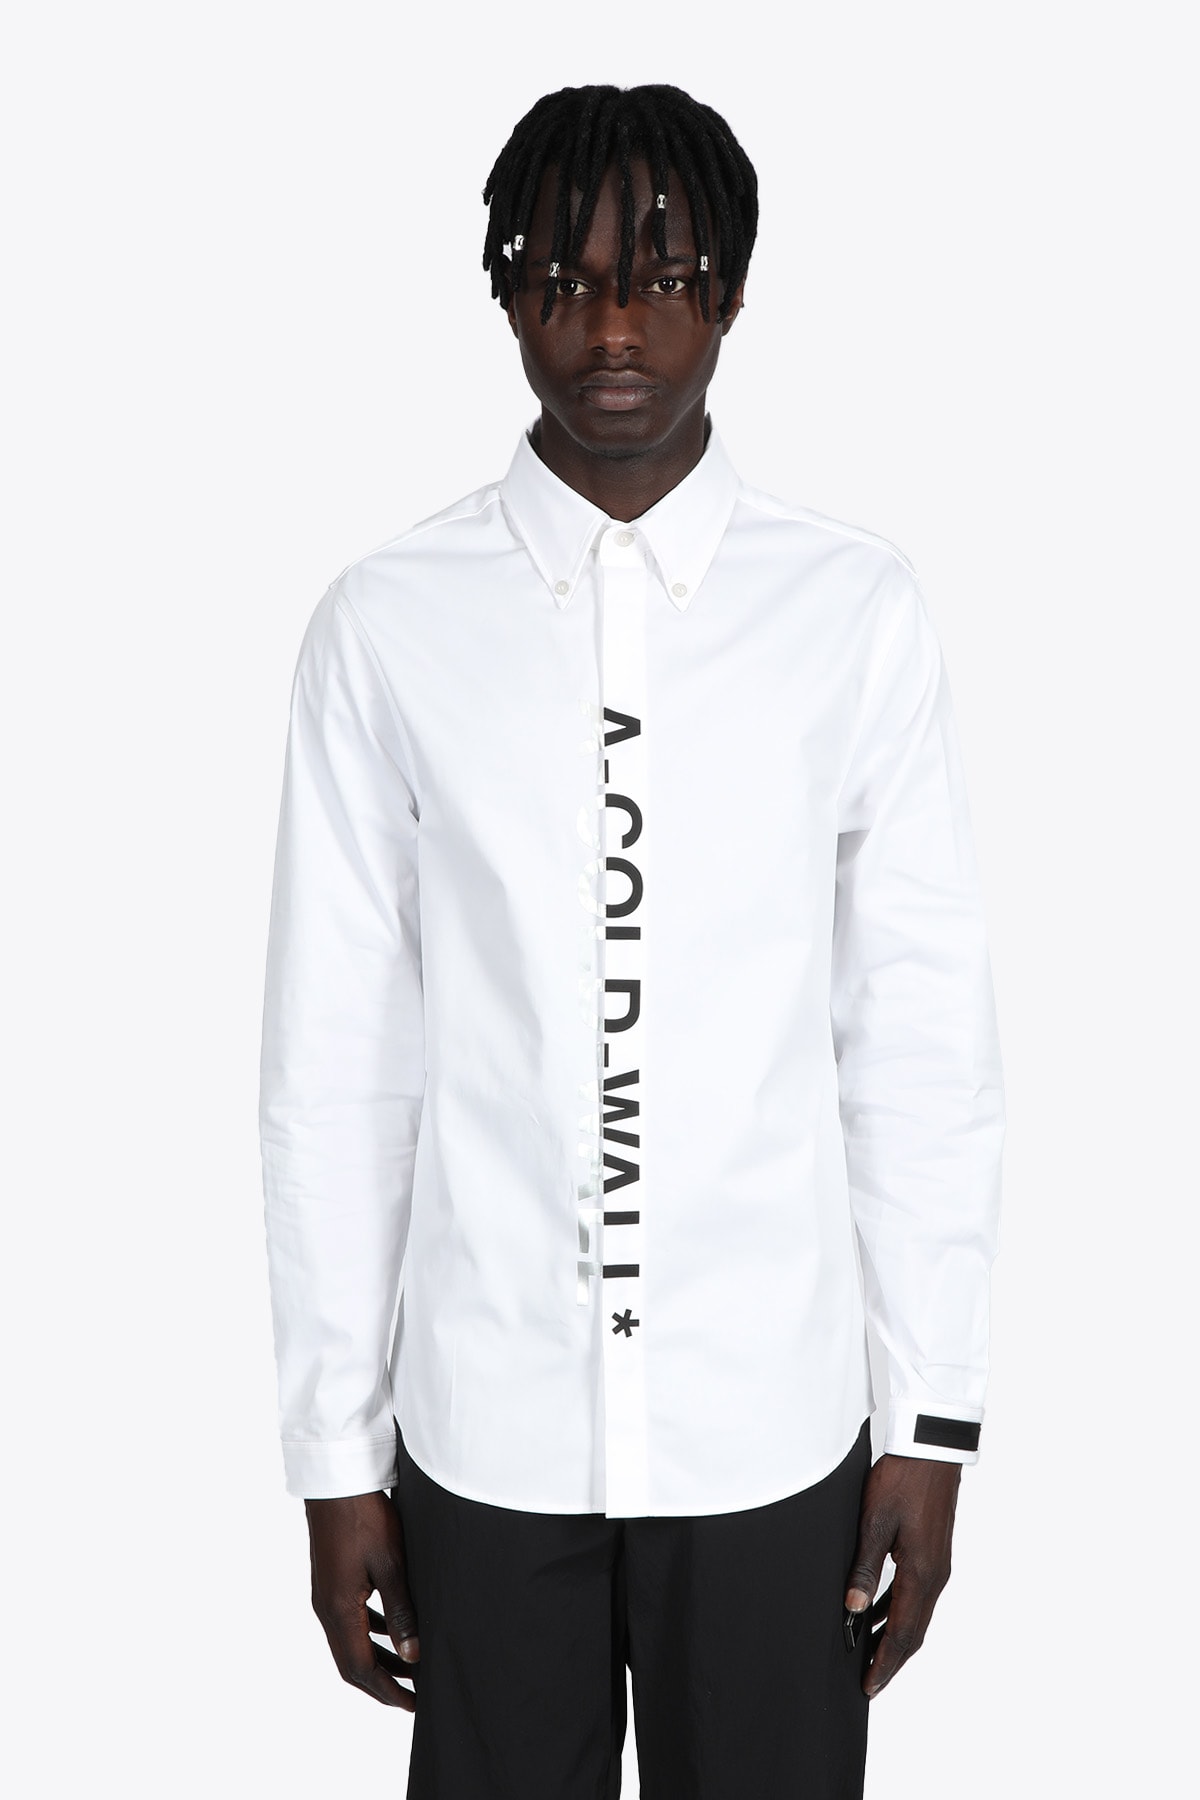 A-COLD-WALL Woven Split Dialogue Shirt White cotton button down shirt with vertical logo